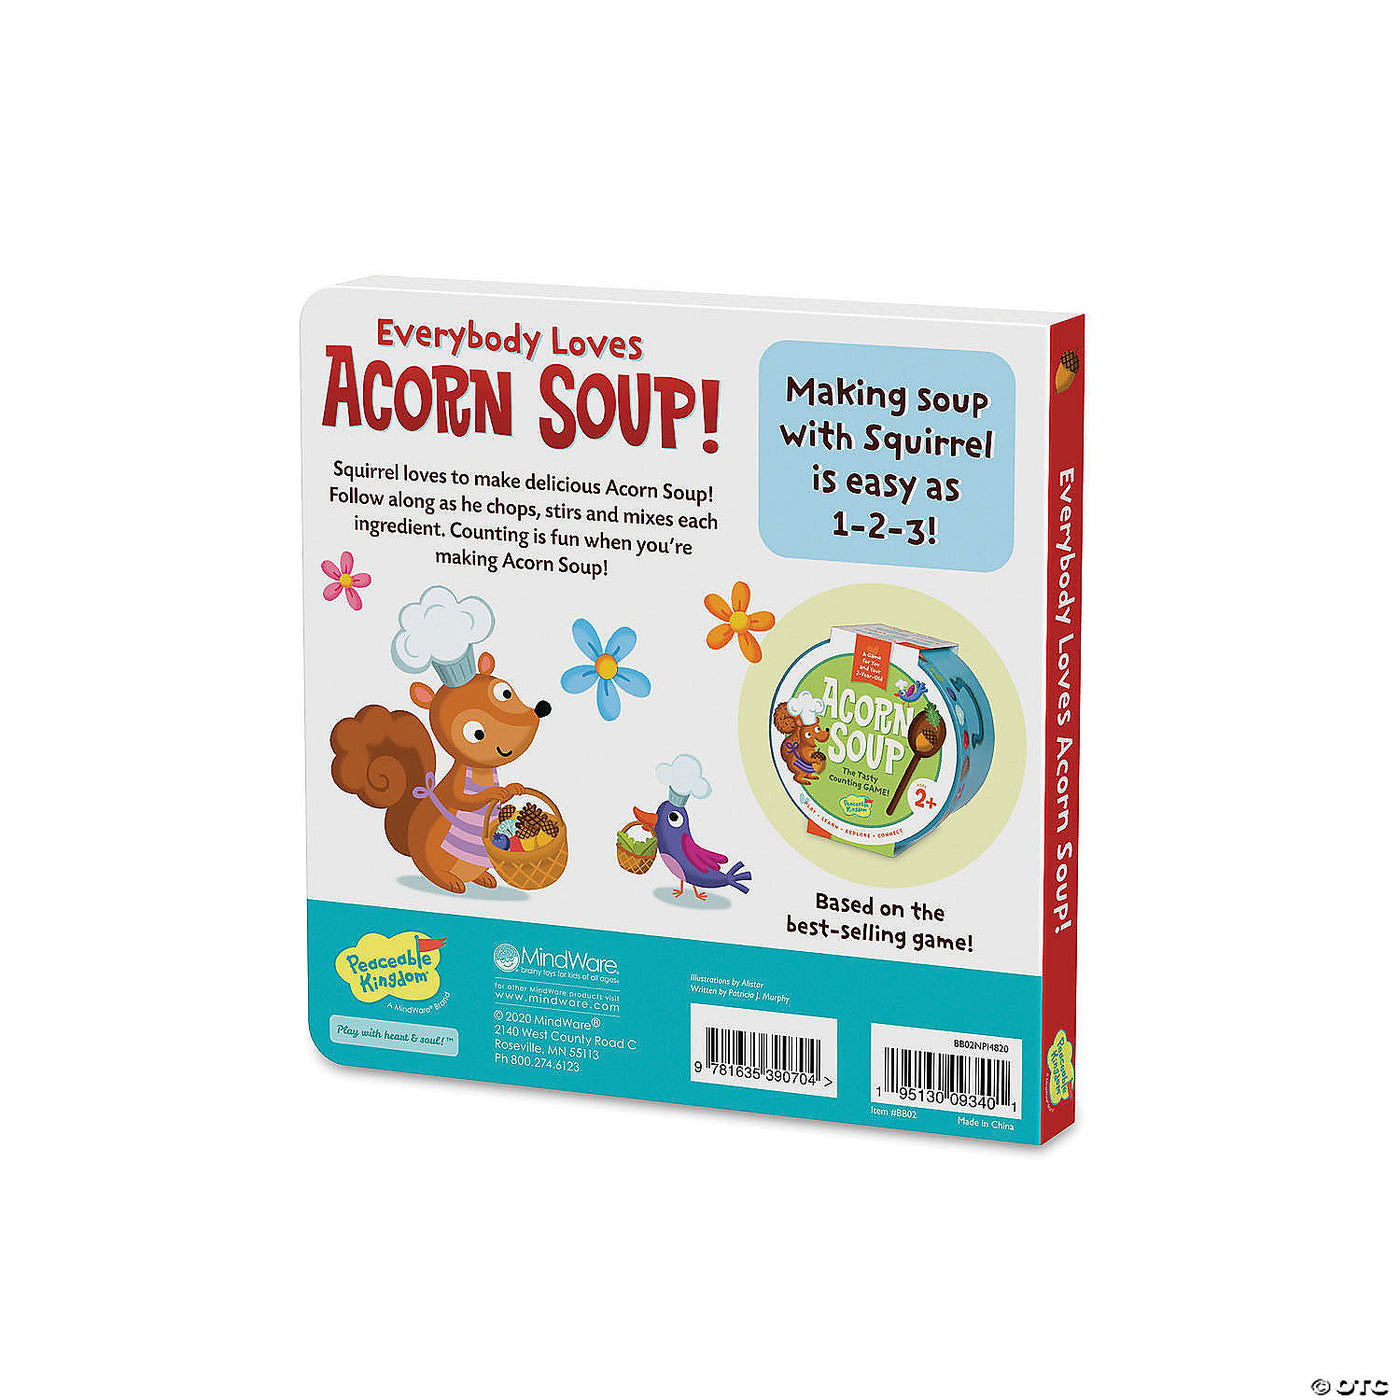 Everybody Loves Acorn Soup!